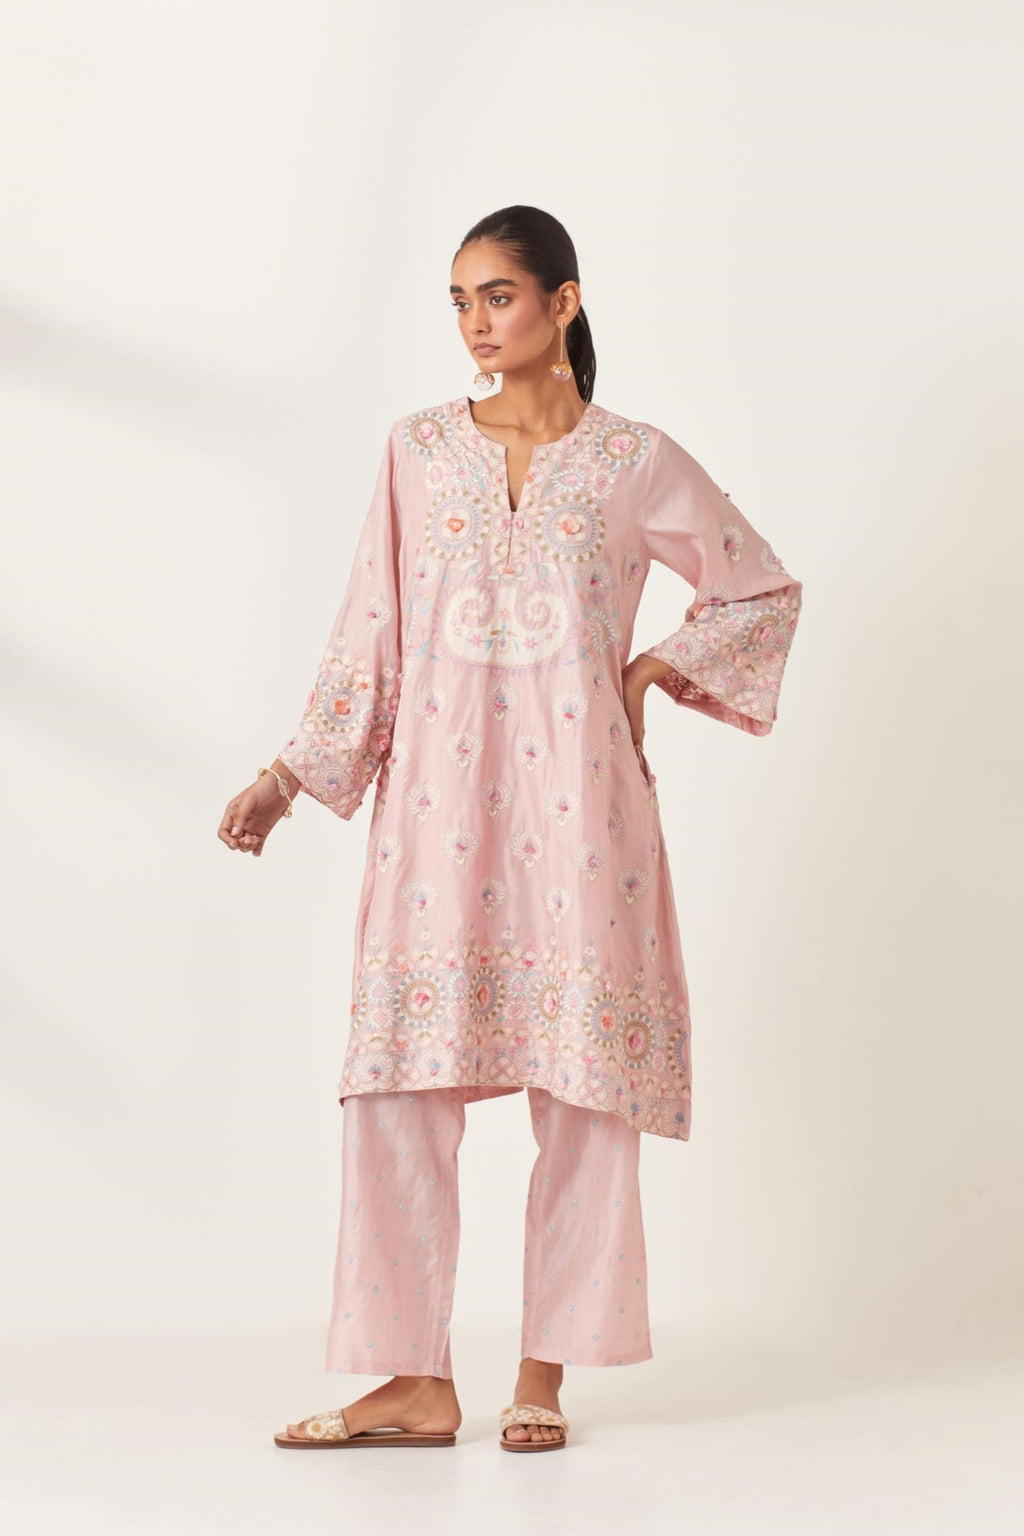 Pink silk straight hem mid-length abha style kurta set with bold appliqué embroidery along with multi-colored aari thread work and tassels.